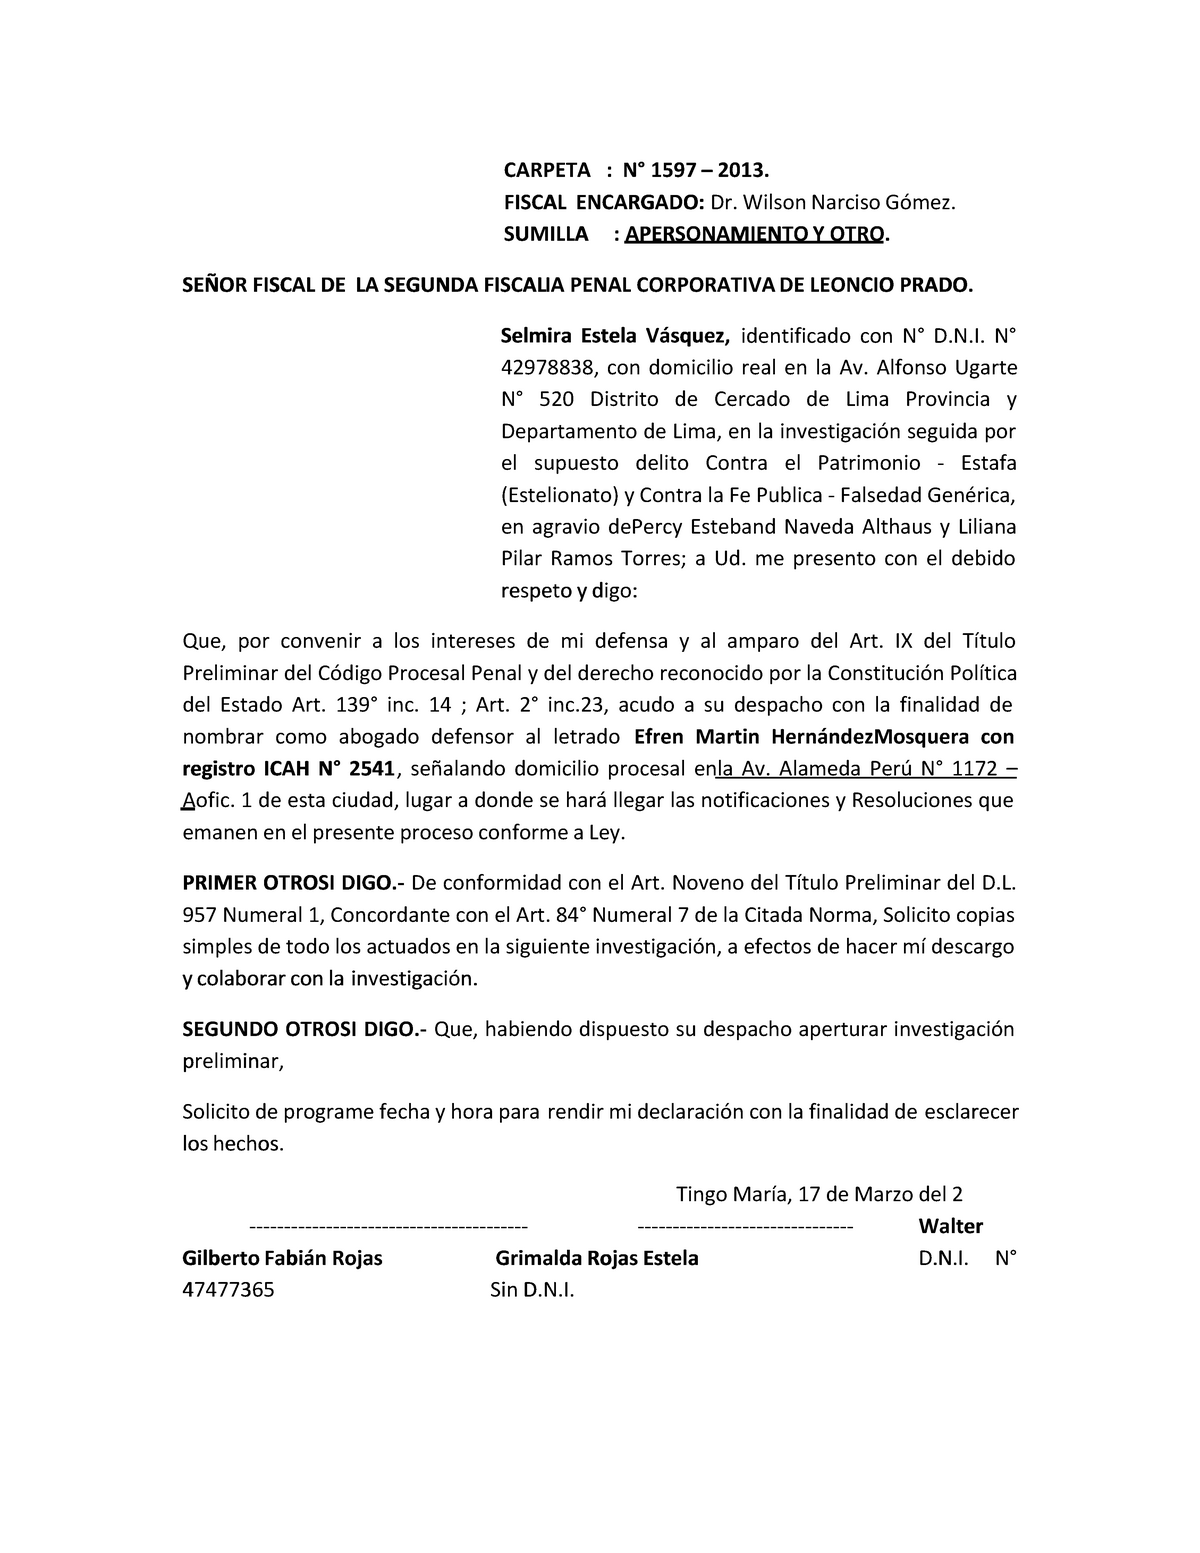 Apersonamiento a la fiscalia - CARPETA CARPETA : N° : N° 15971597 – – 2013.  2013. FISCAL - Studocu